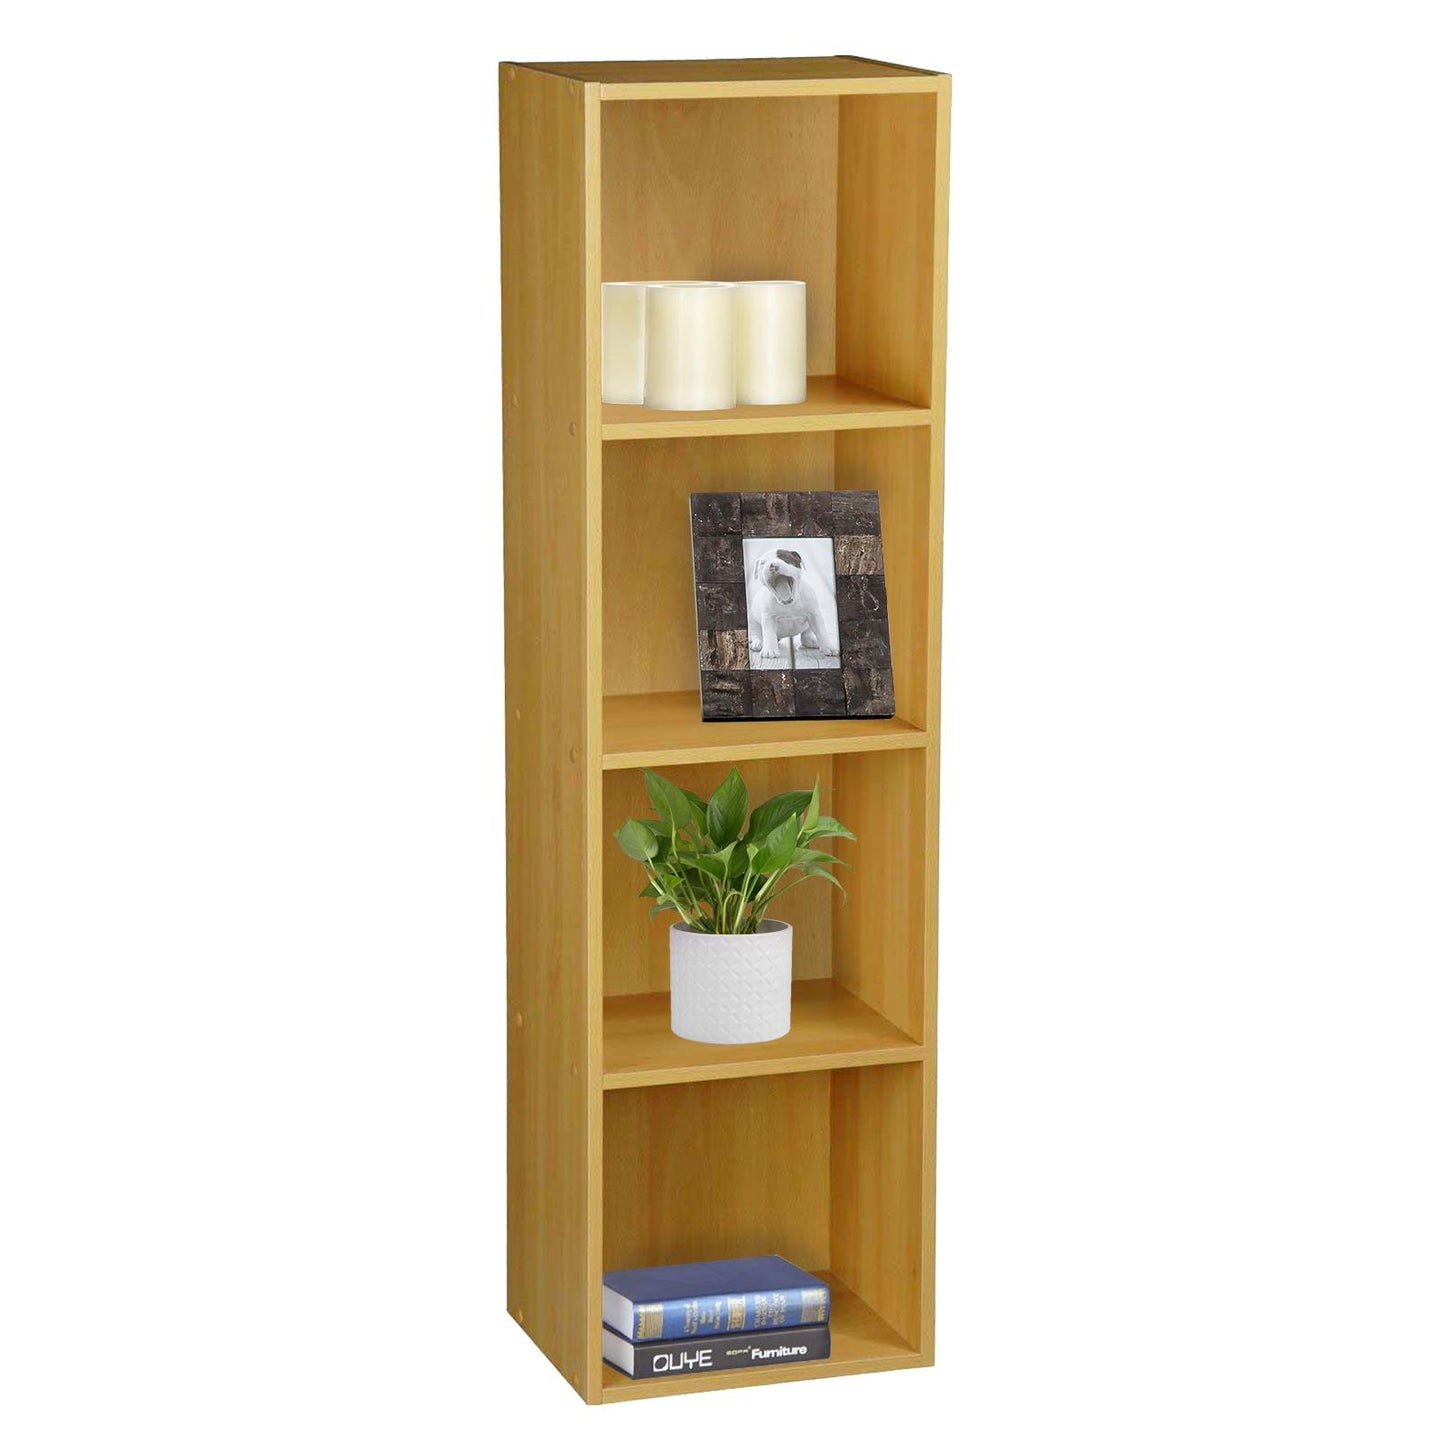 Green Wooden Bookshelf Organizer for Home or Office